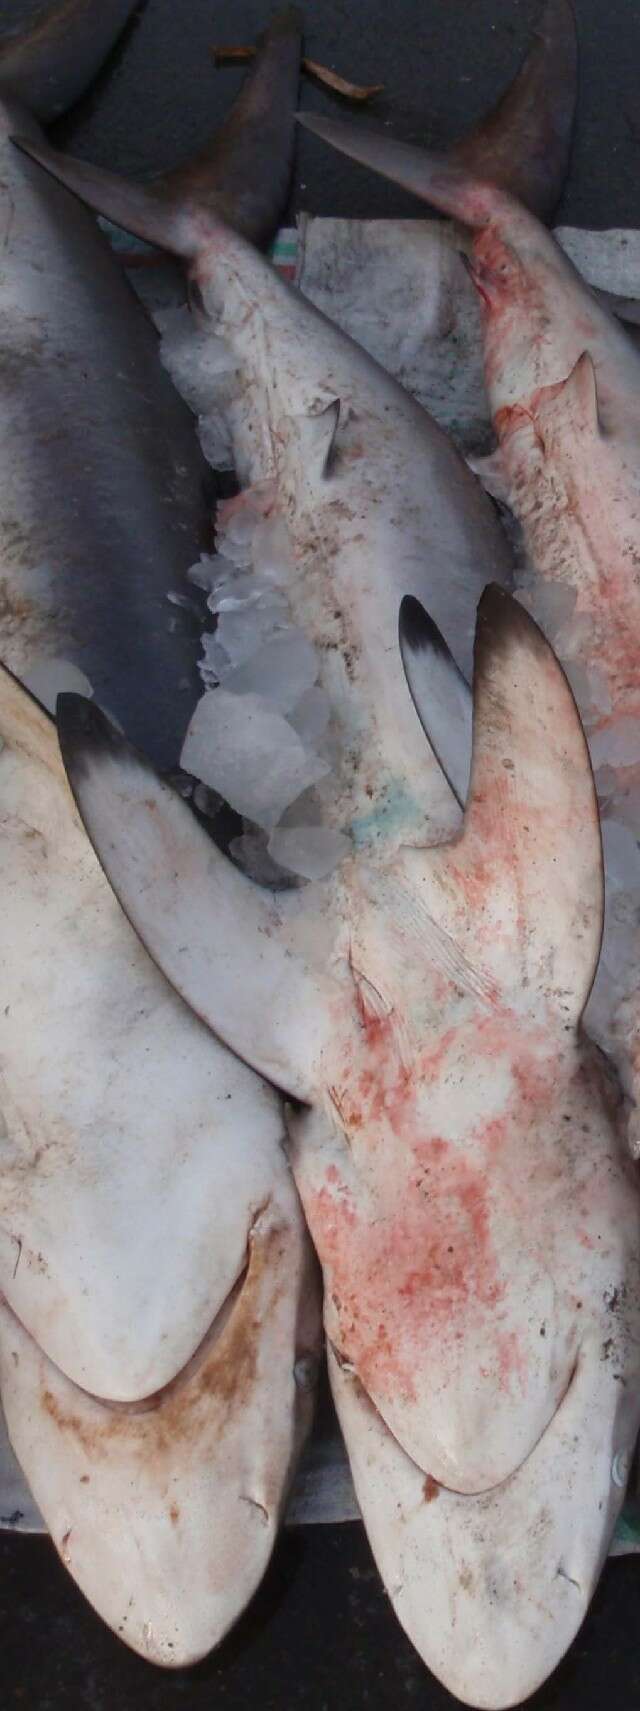 Image of Silky Shark